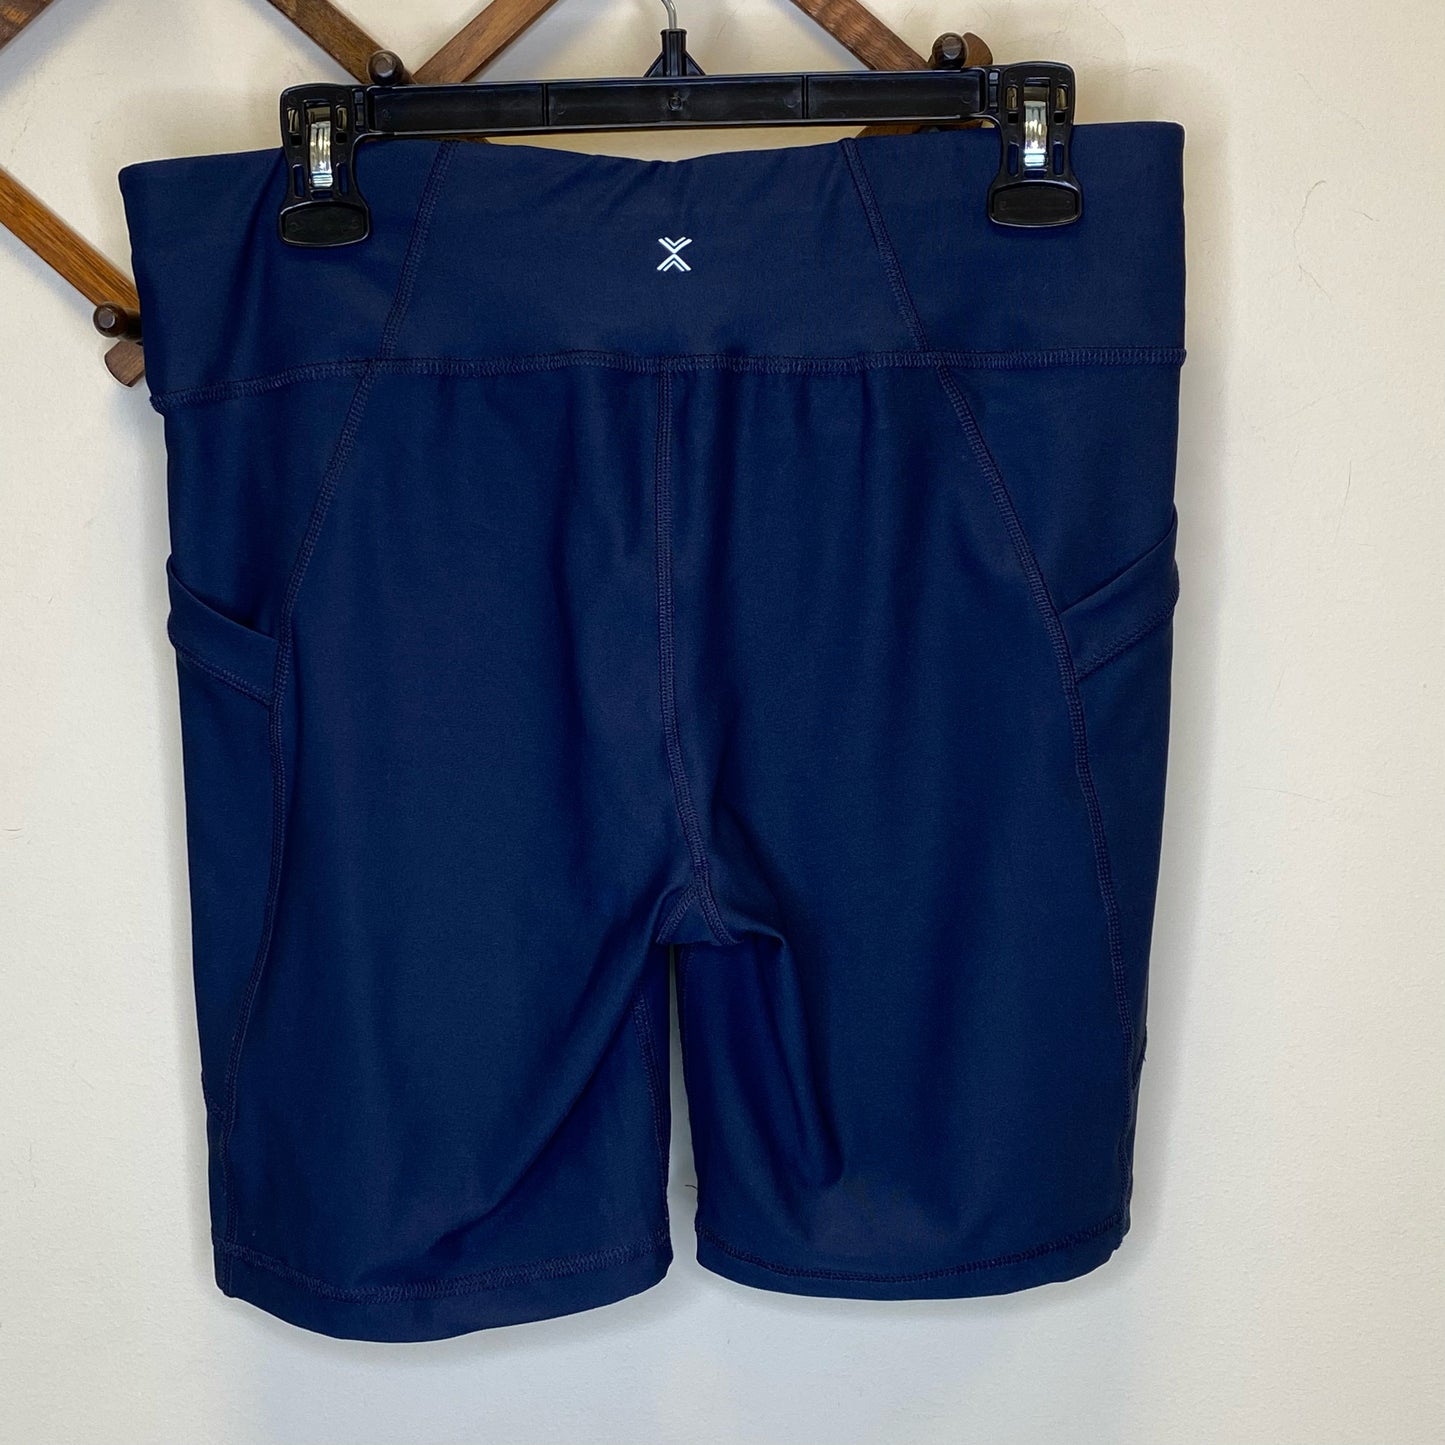 Xersion Quick-Dri Athletic Shorts - Size Large